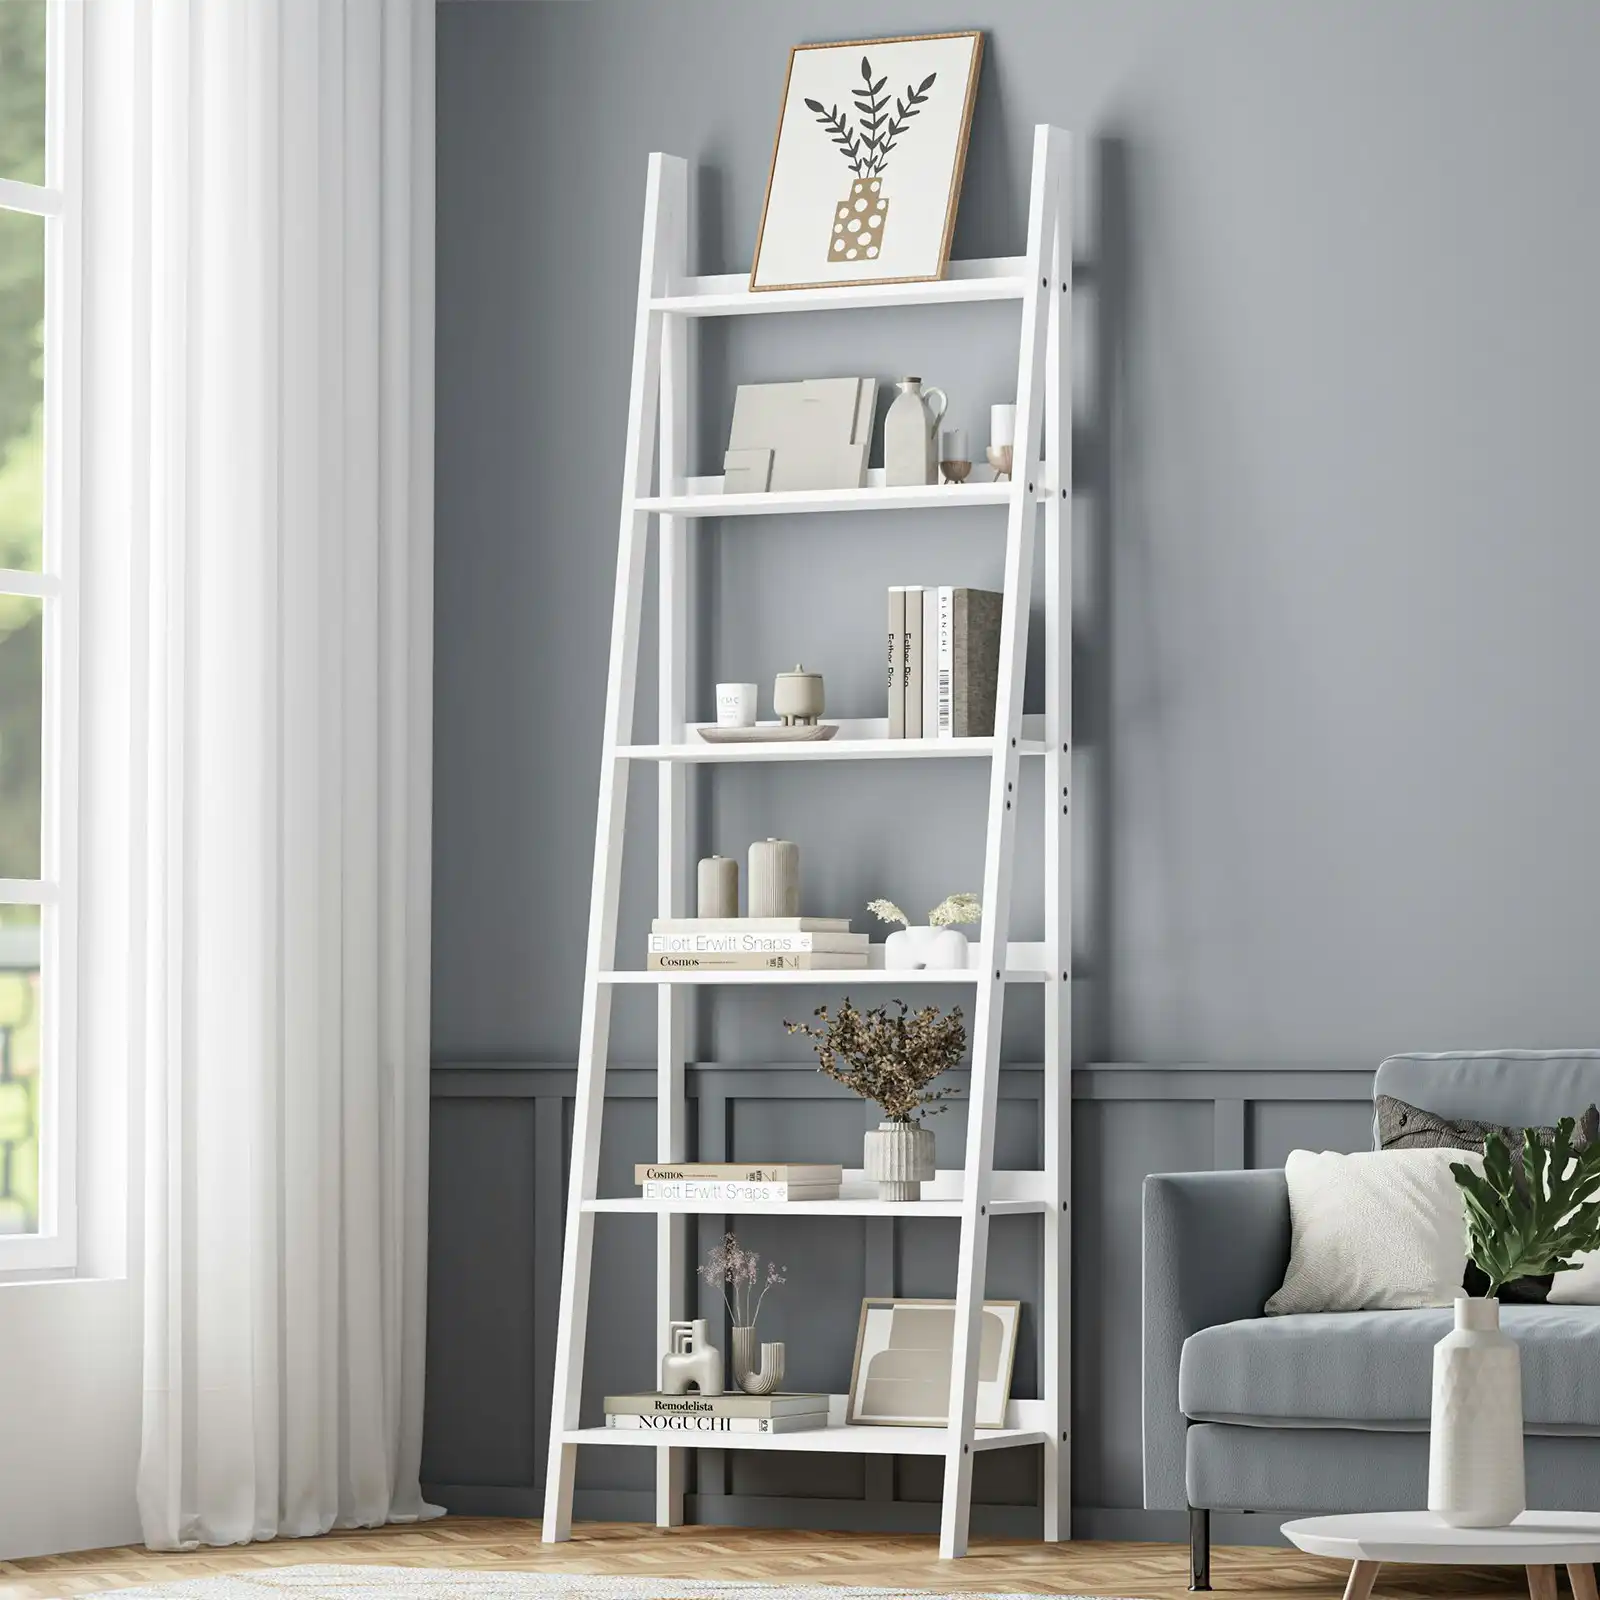 Oikiture Bookshelf 6 Tier Corner Ladder Shelf Home Storage Display Rack White